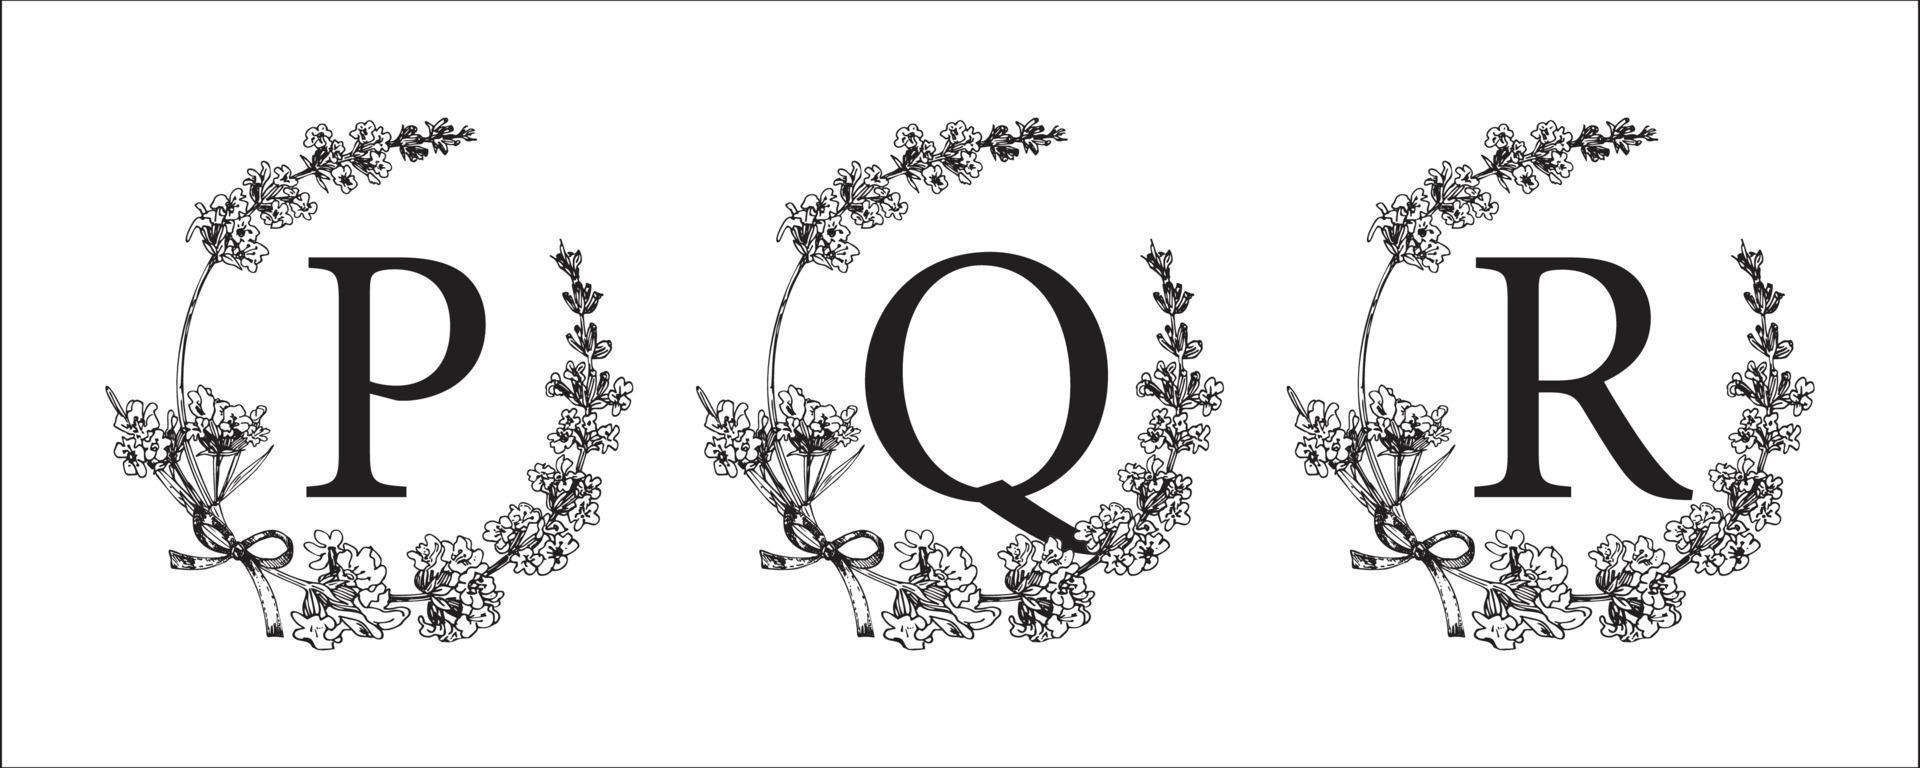 P Q R letter. Set modern hand-drawn engraved sketch illustrations. Lavender flower wreath with alphabet monogram. good idea for wedding decor. Vintage vector typographic emblem, logo, label design.